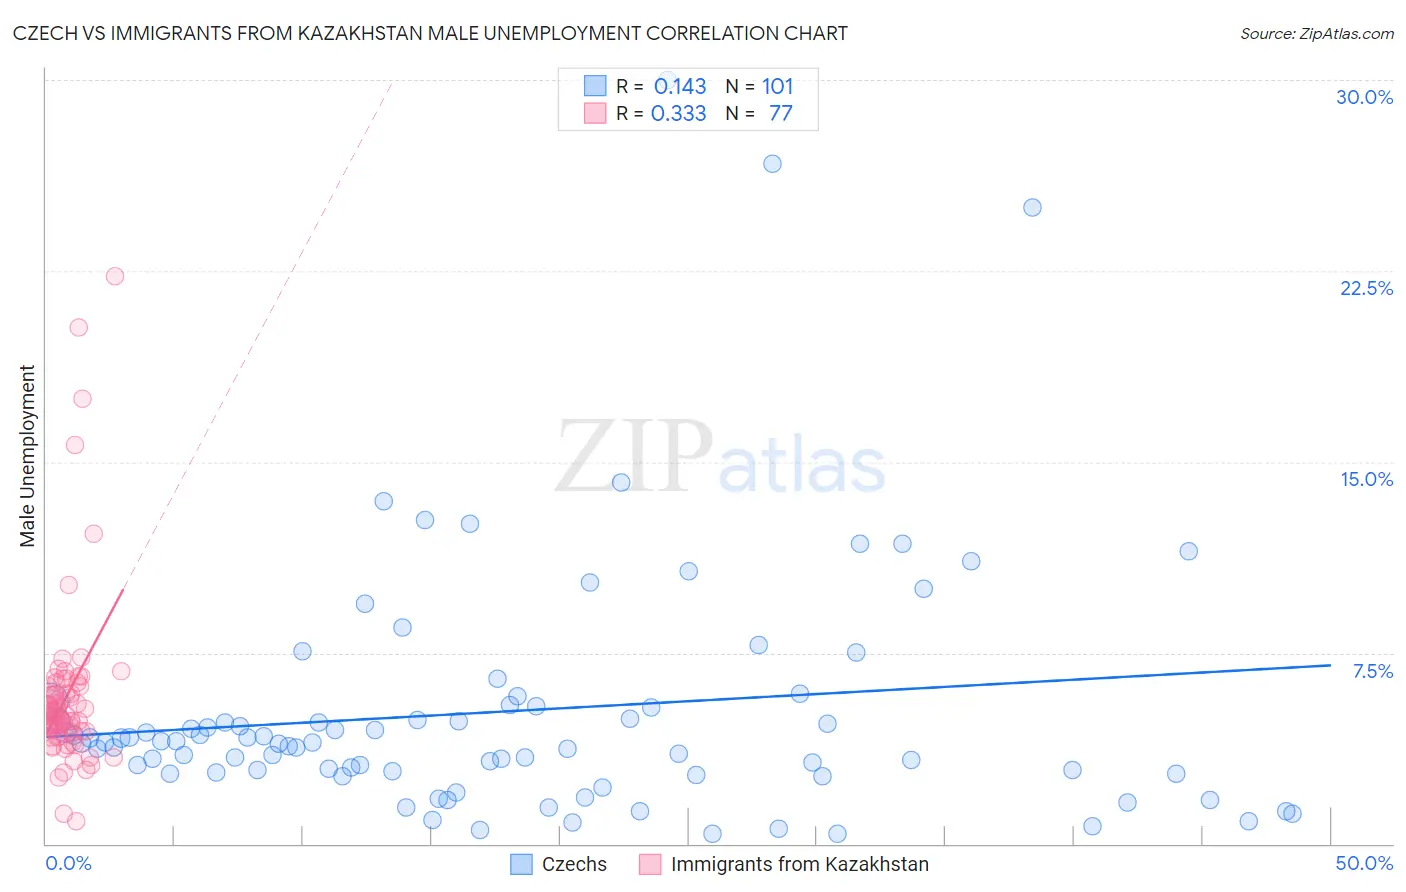 Czech vs Immigrants from Kazakhstan Male Unemployment